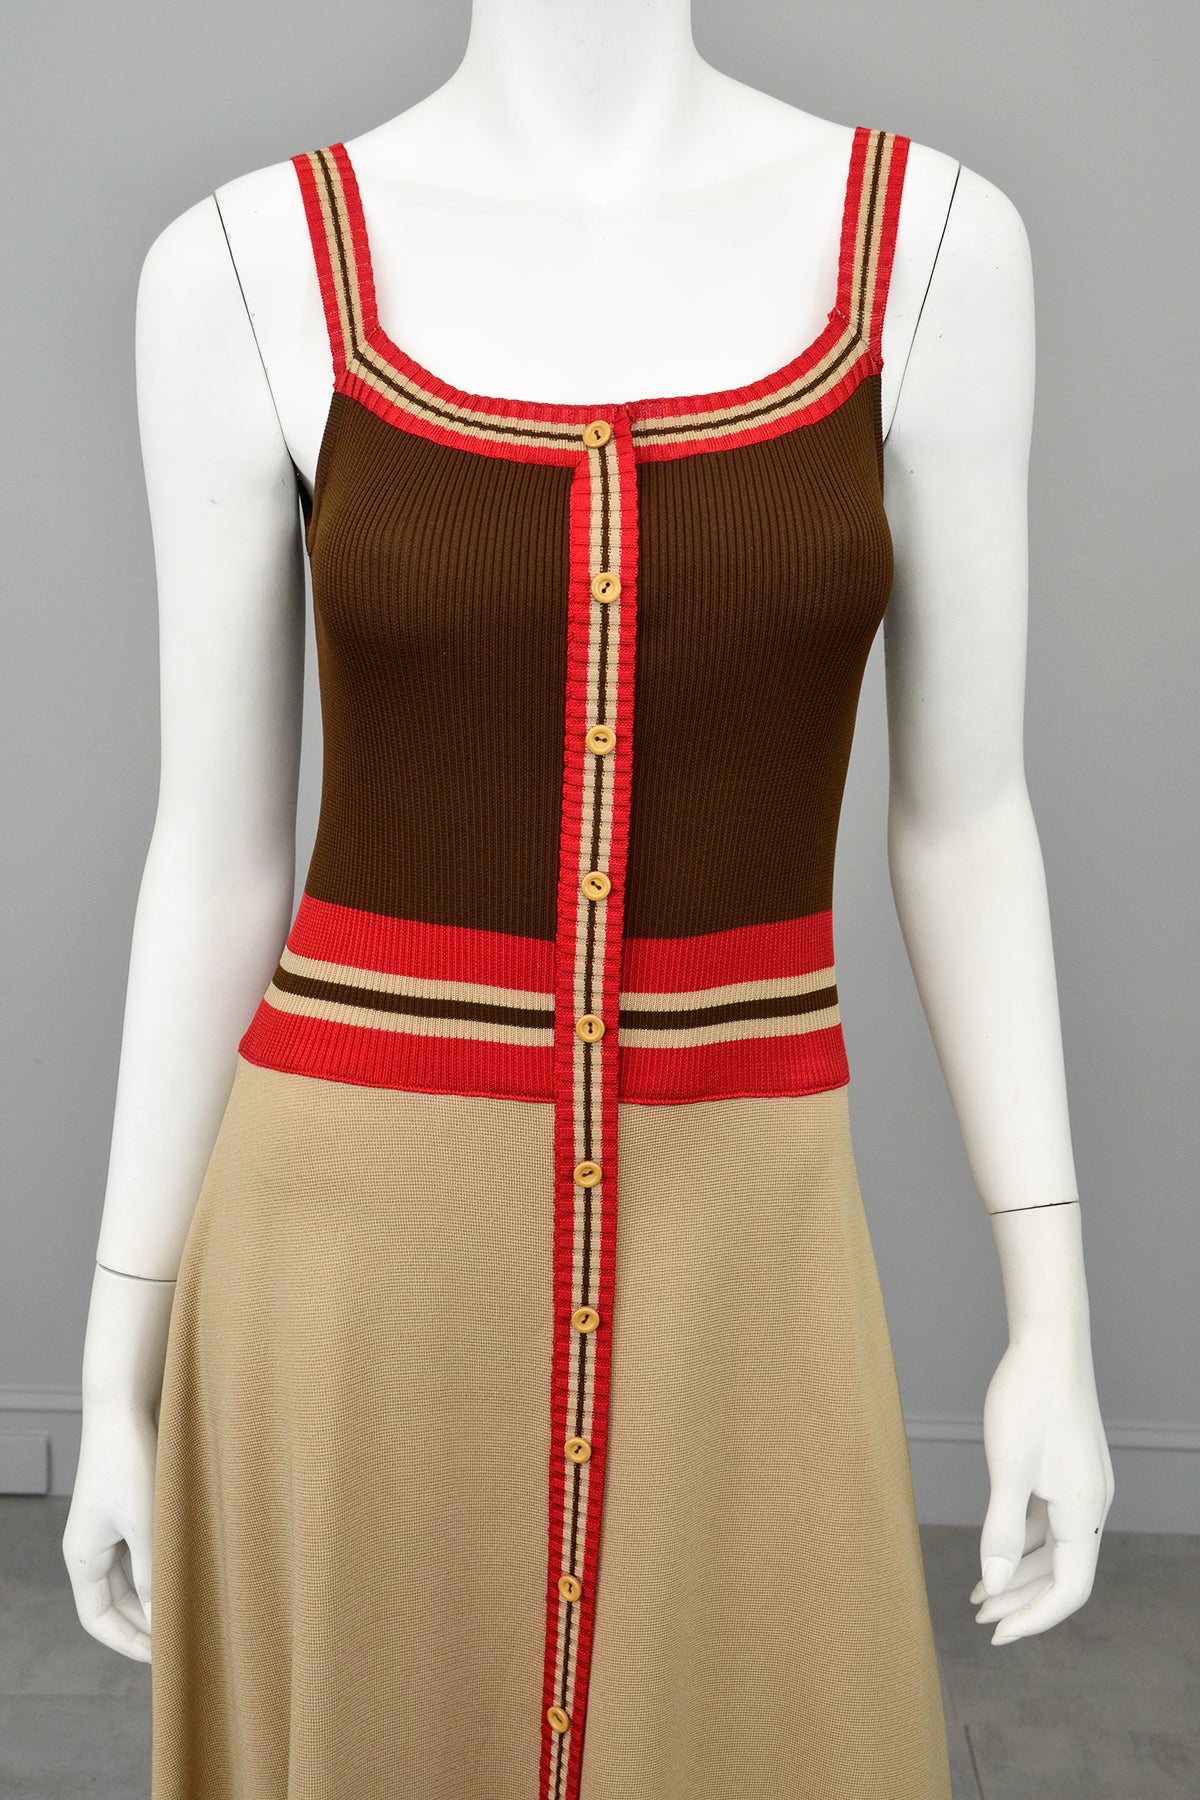 1970s Mod Retro Color Block Knit Dress by Crissa